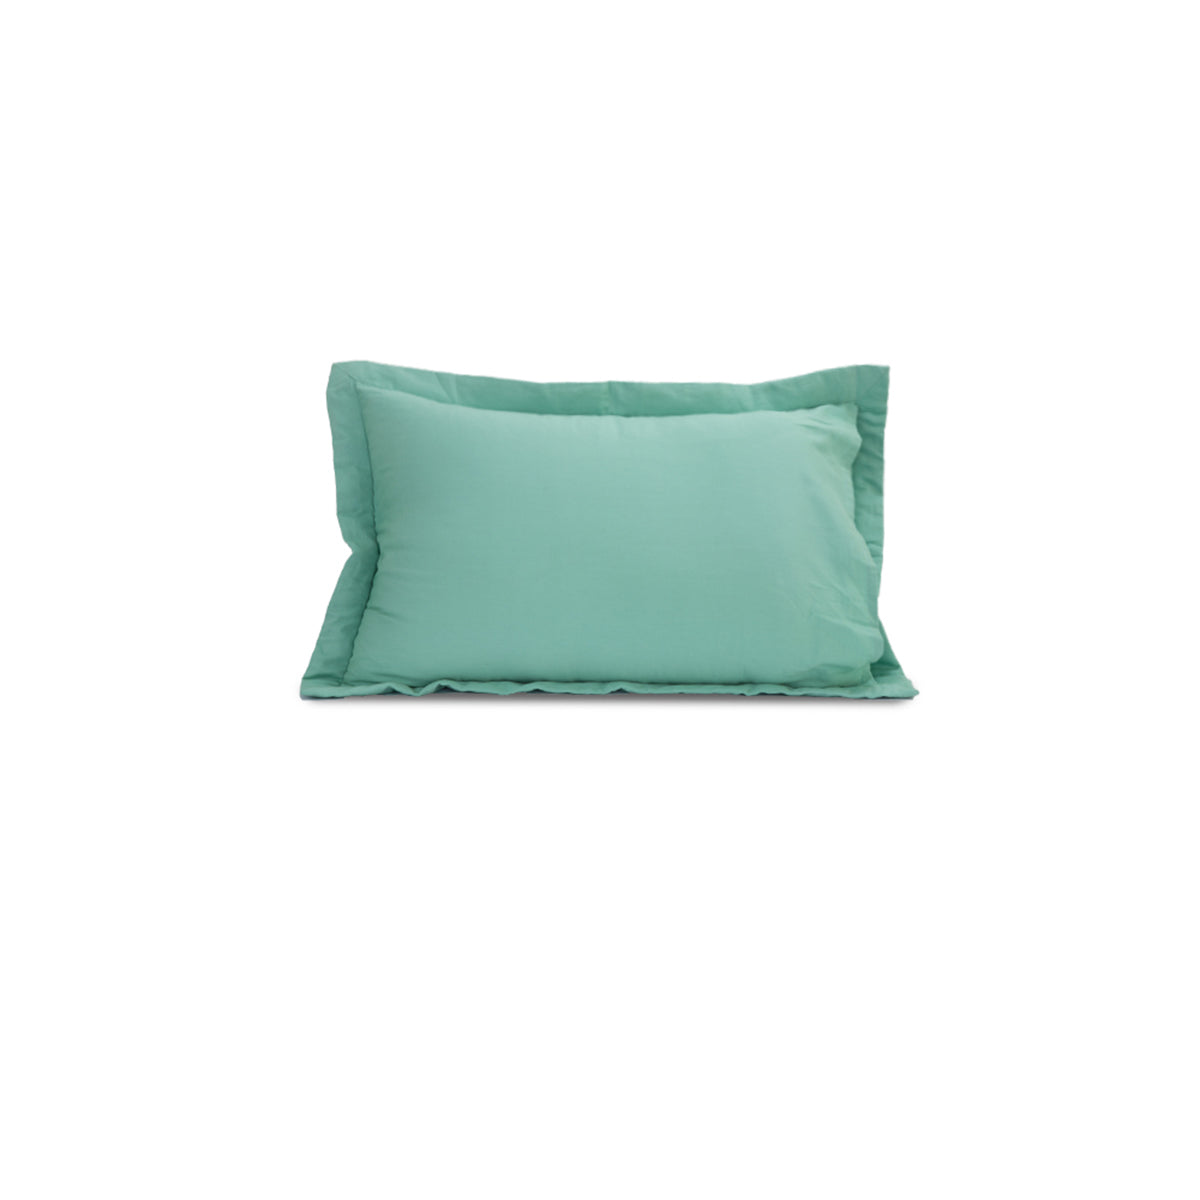 Stitch Quilted 2PC Pillow Sham Set